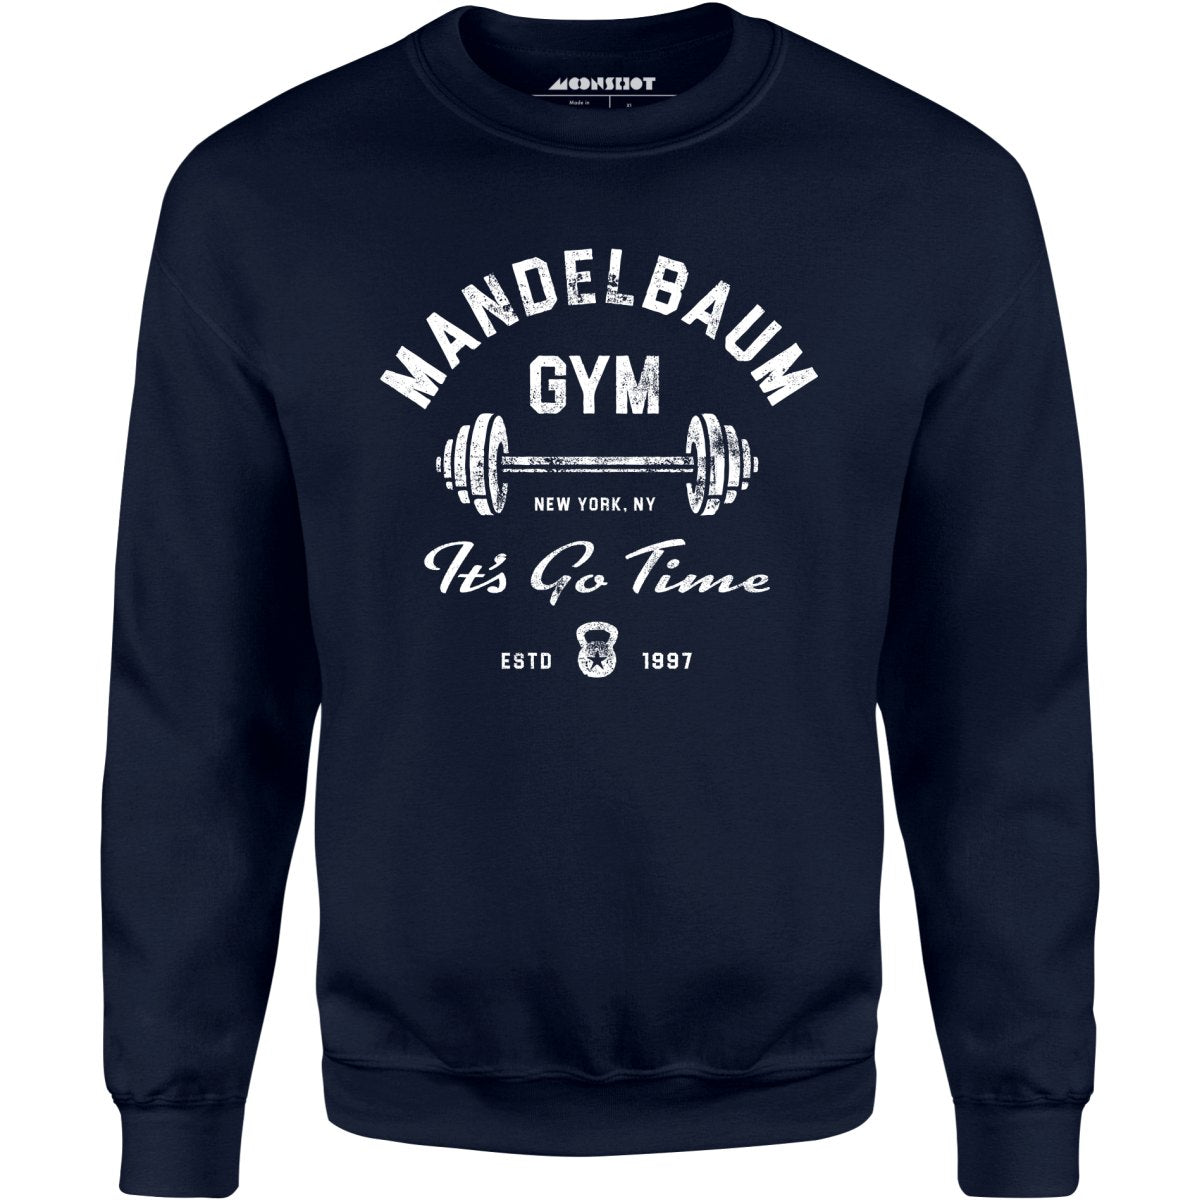 Mandelbaum Gym - Unisex Sweatshirt